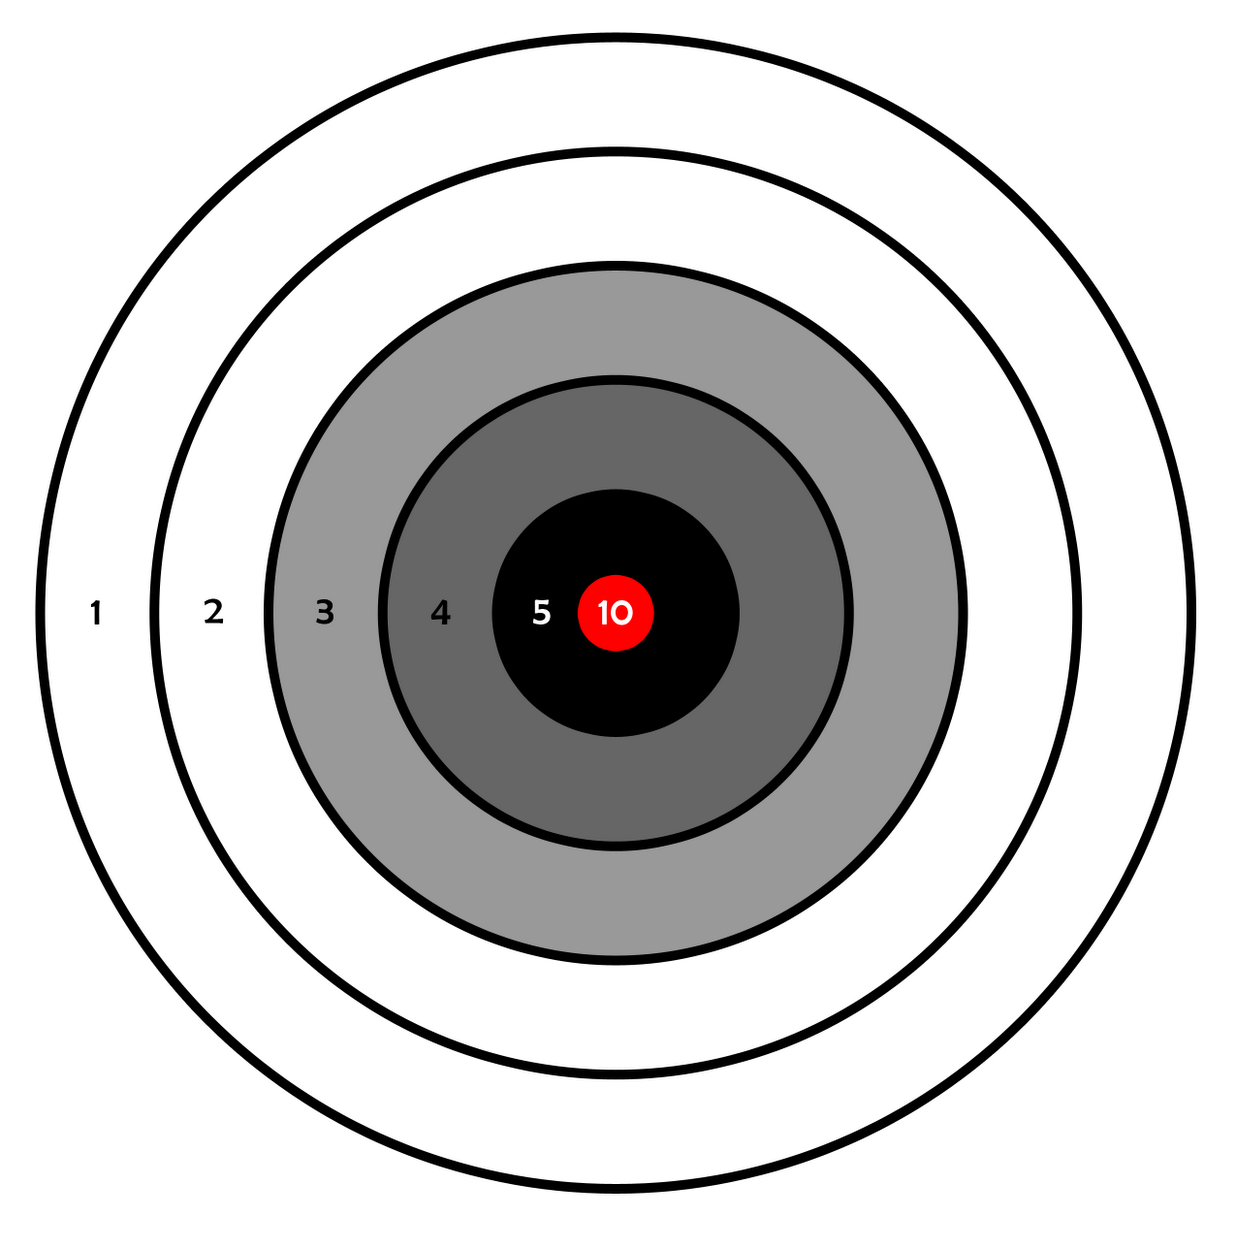 image-result-for-8x11-printable-targets